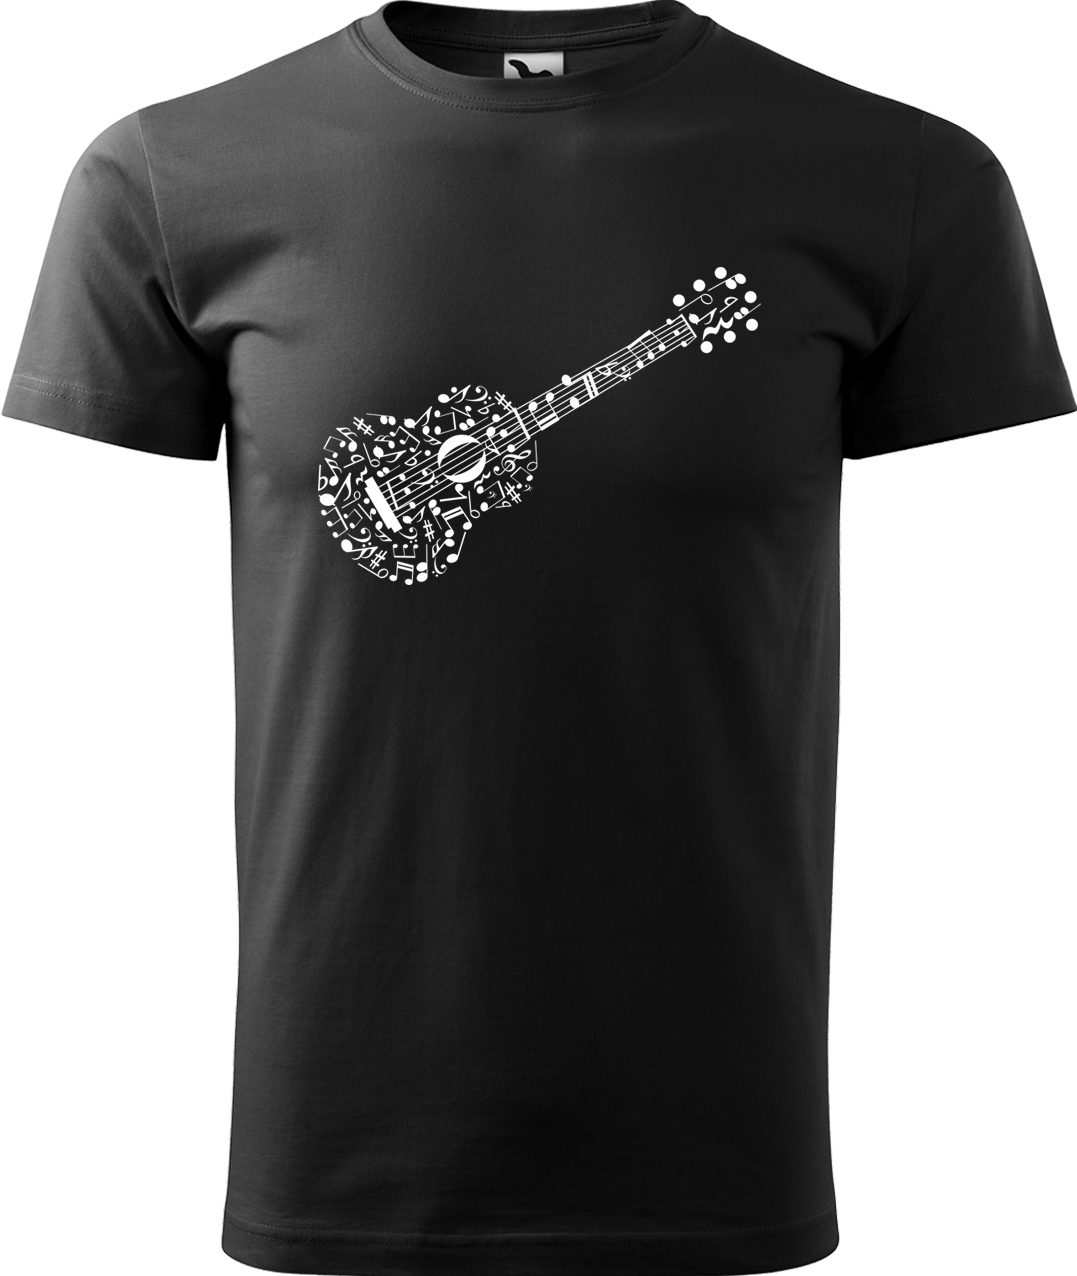 Pánské tričko s kytarou - Kytara z not Velikost: 4XL, Barva: Černá (01), Střih: pánský